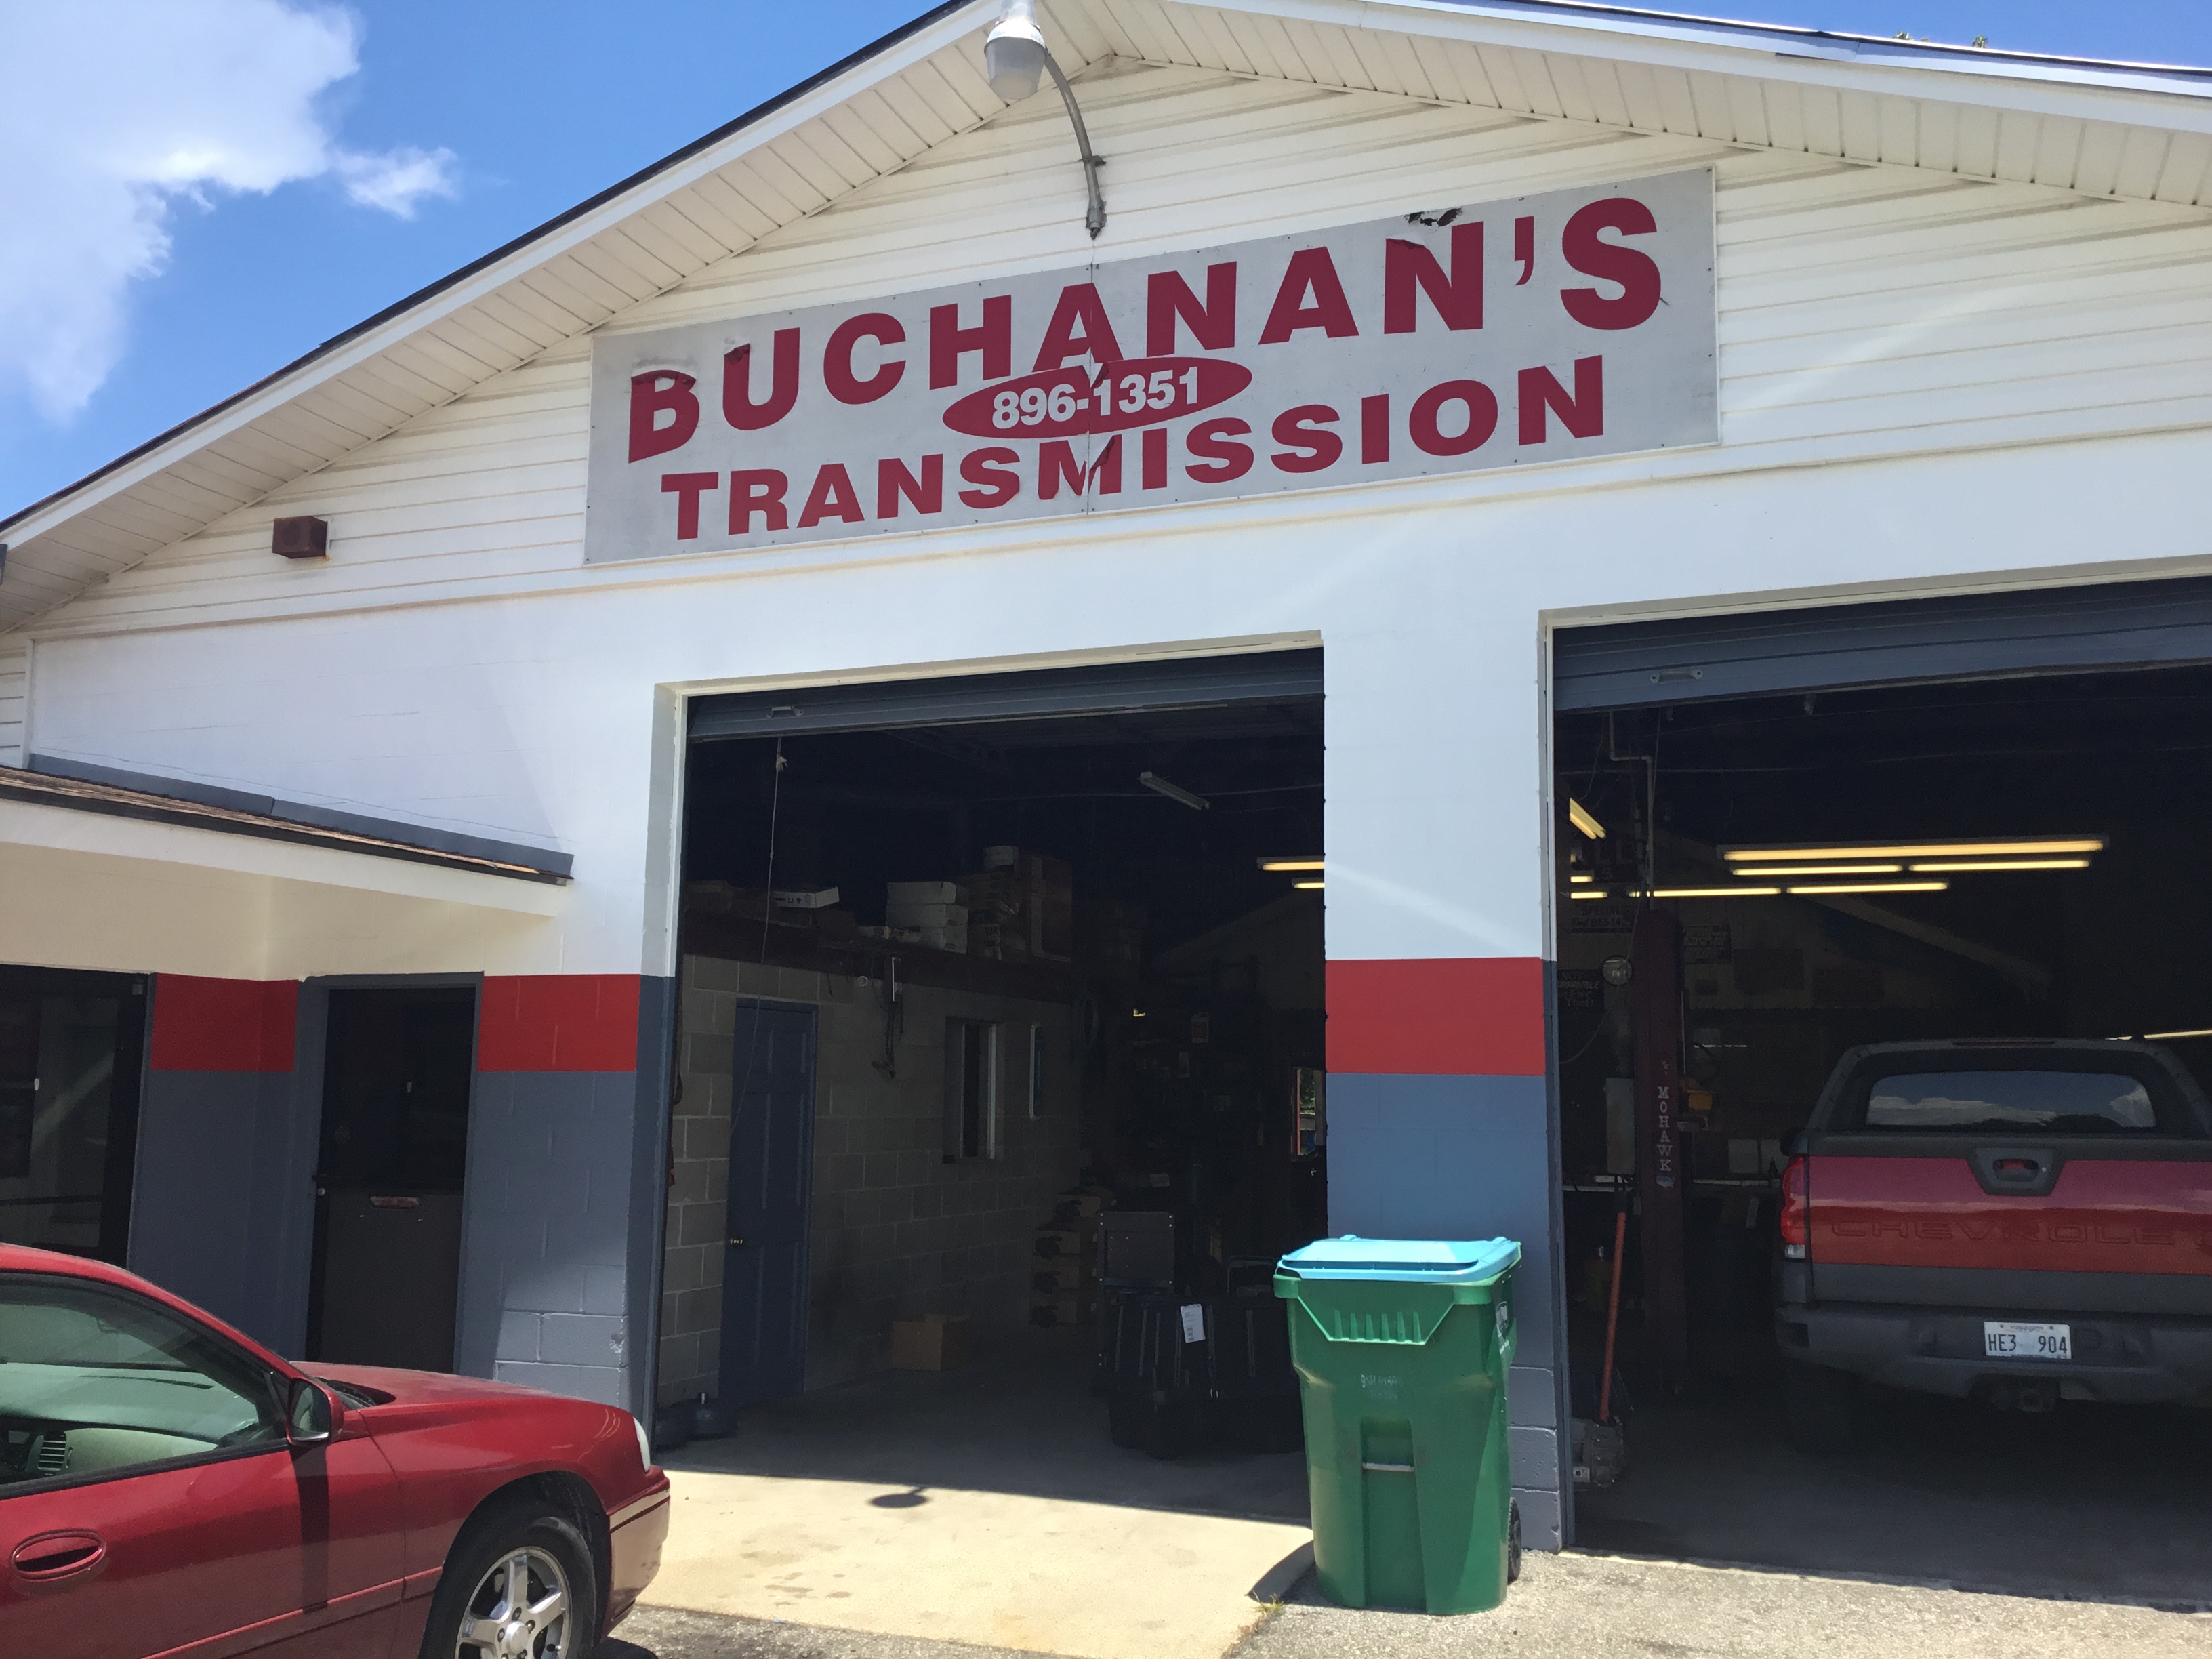 Buchanan's Transmission Service Photo